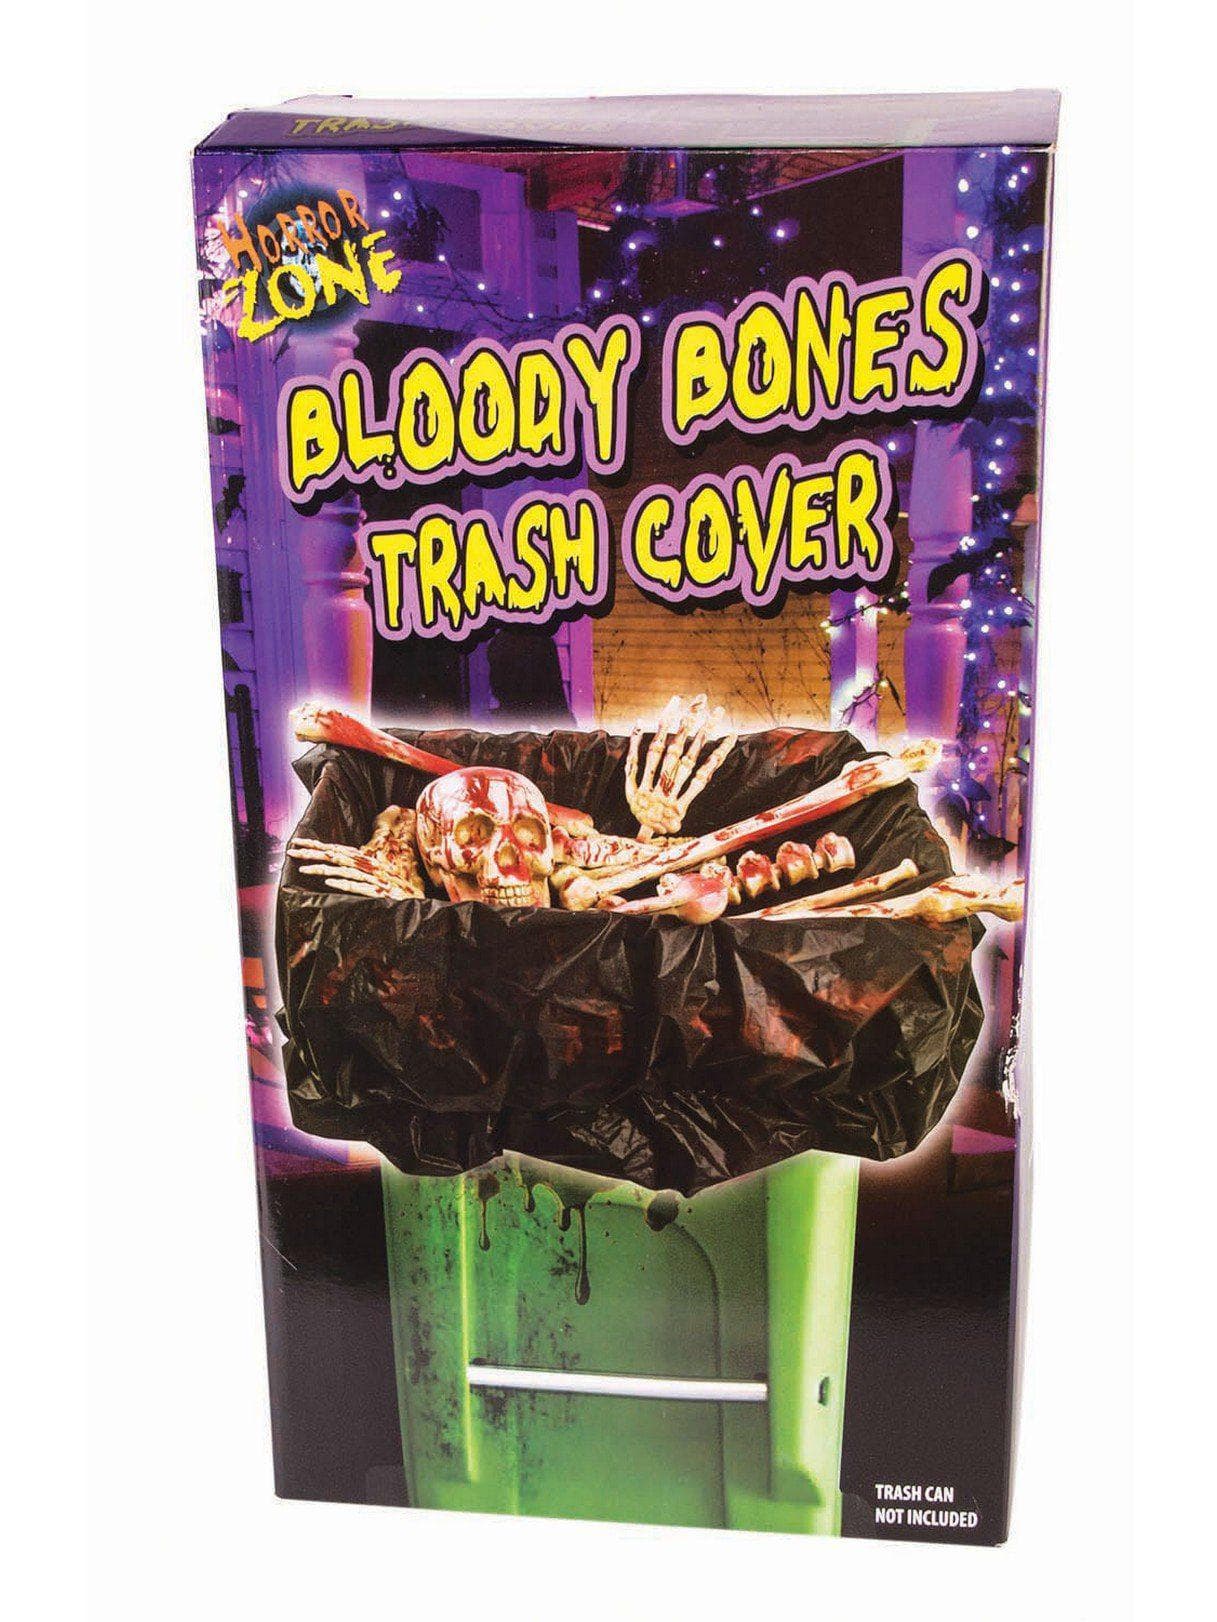 Bloody Bones Trash Cover - costumes.com